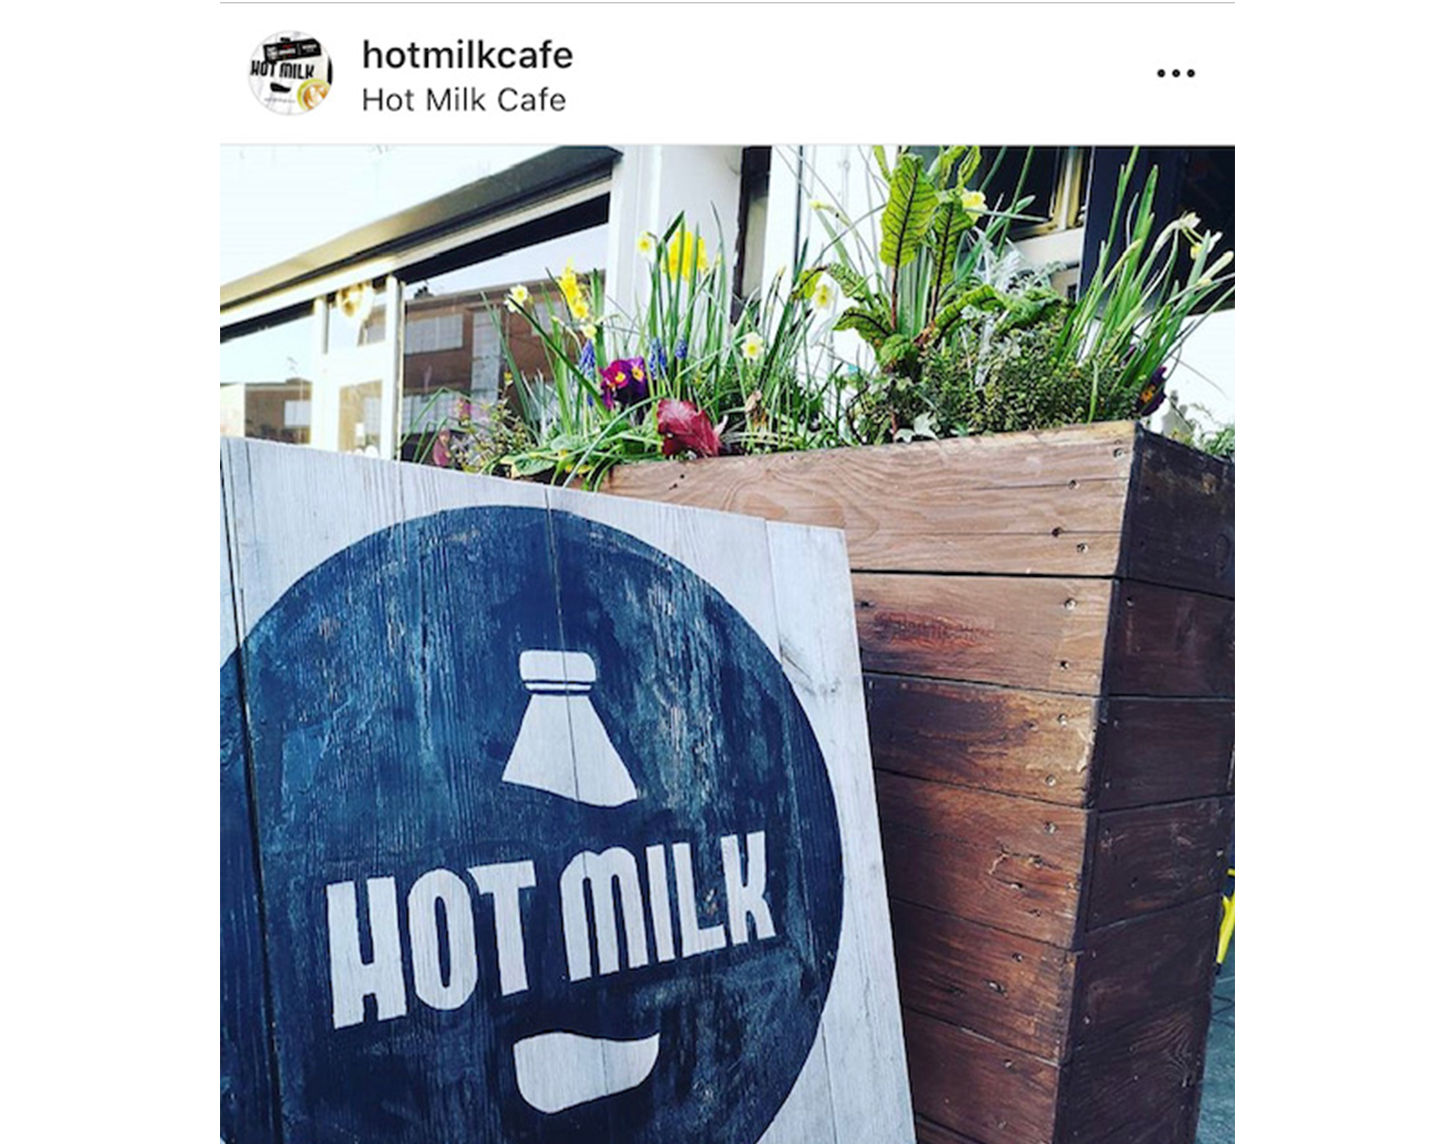 Hot Milk Cafe Instagram post